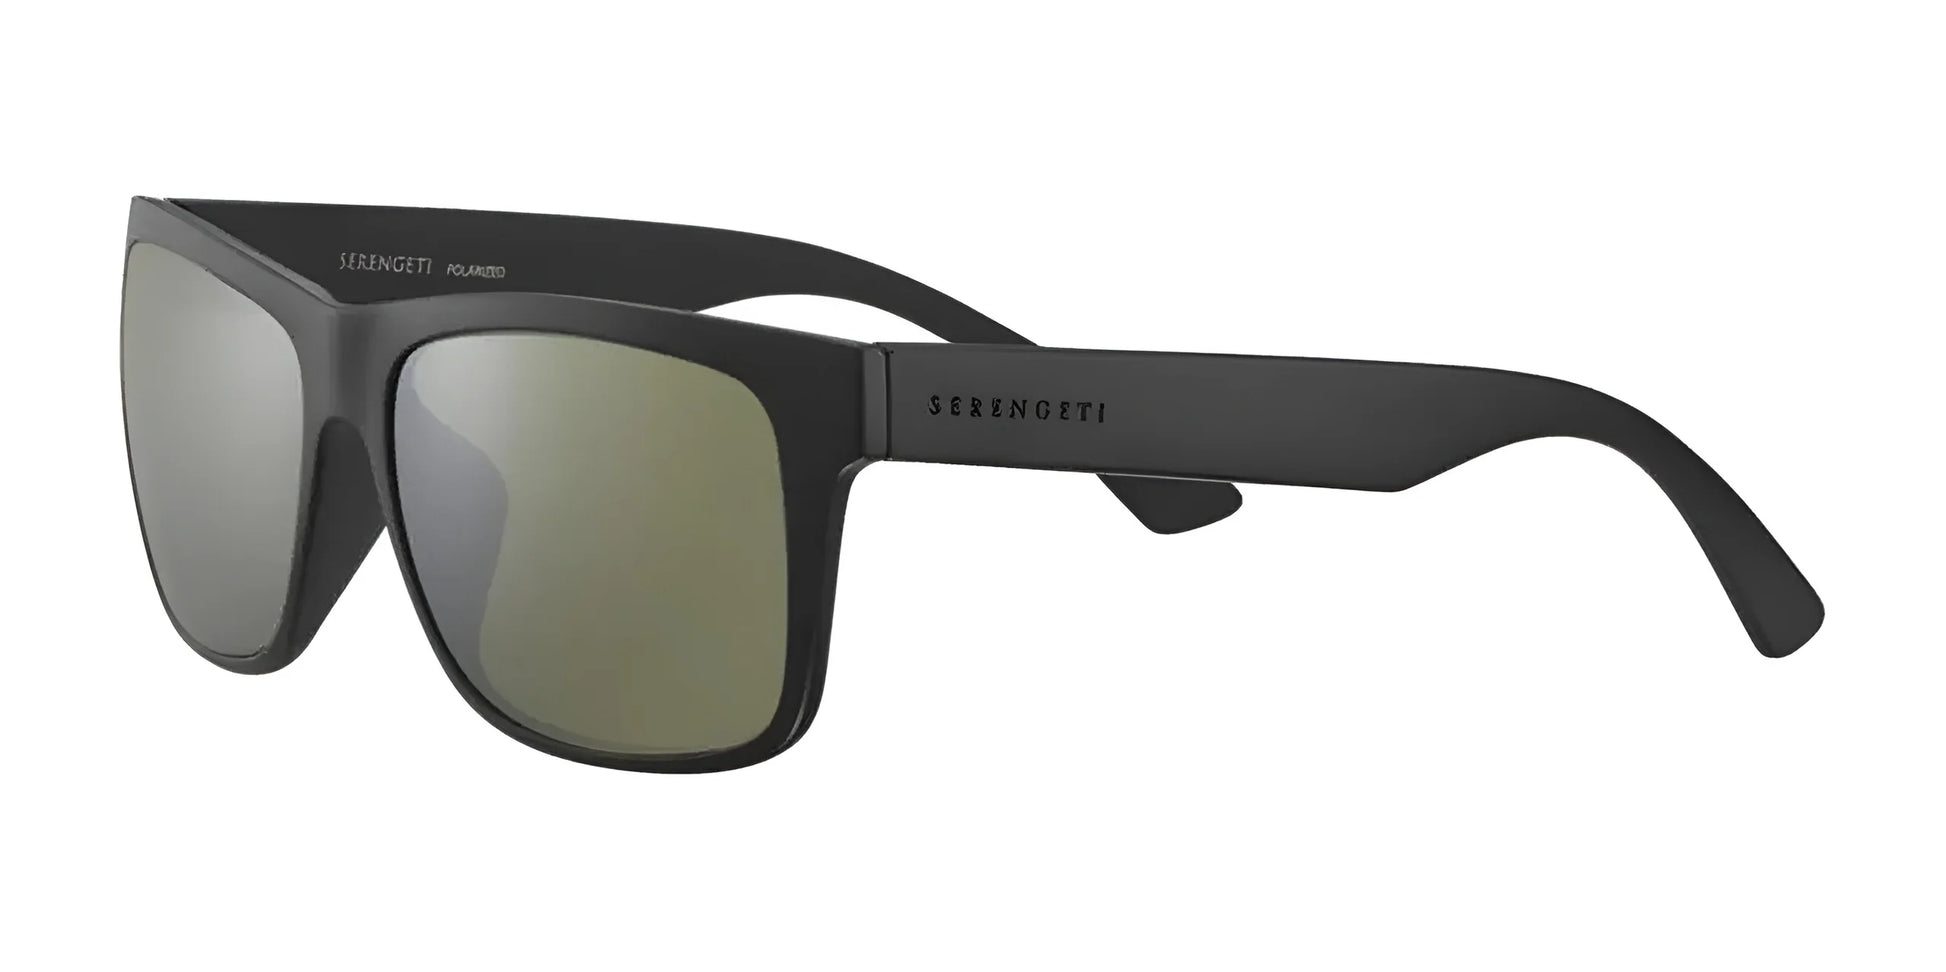 Serengeti POSITANO Sunglasses Black Matte / Mineral Polarized 555nm Cat 3 to 3